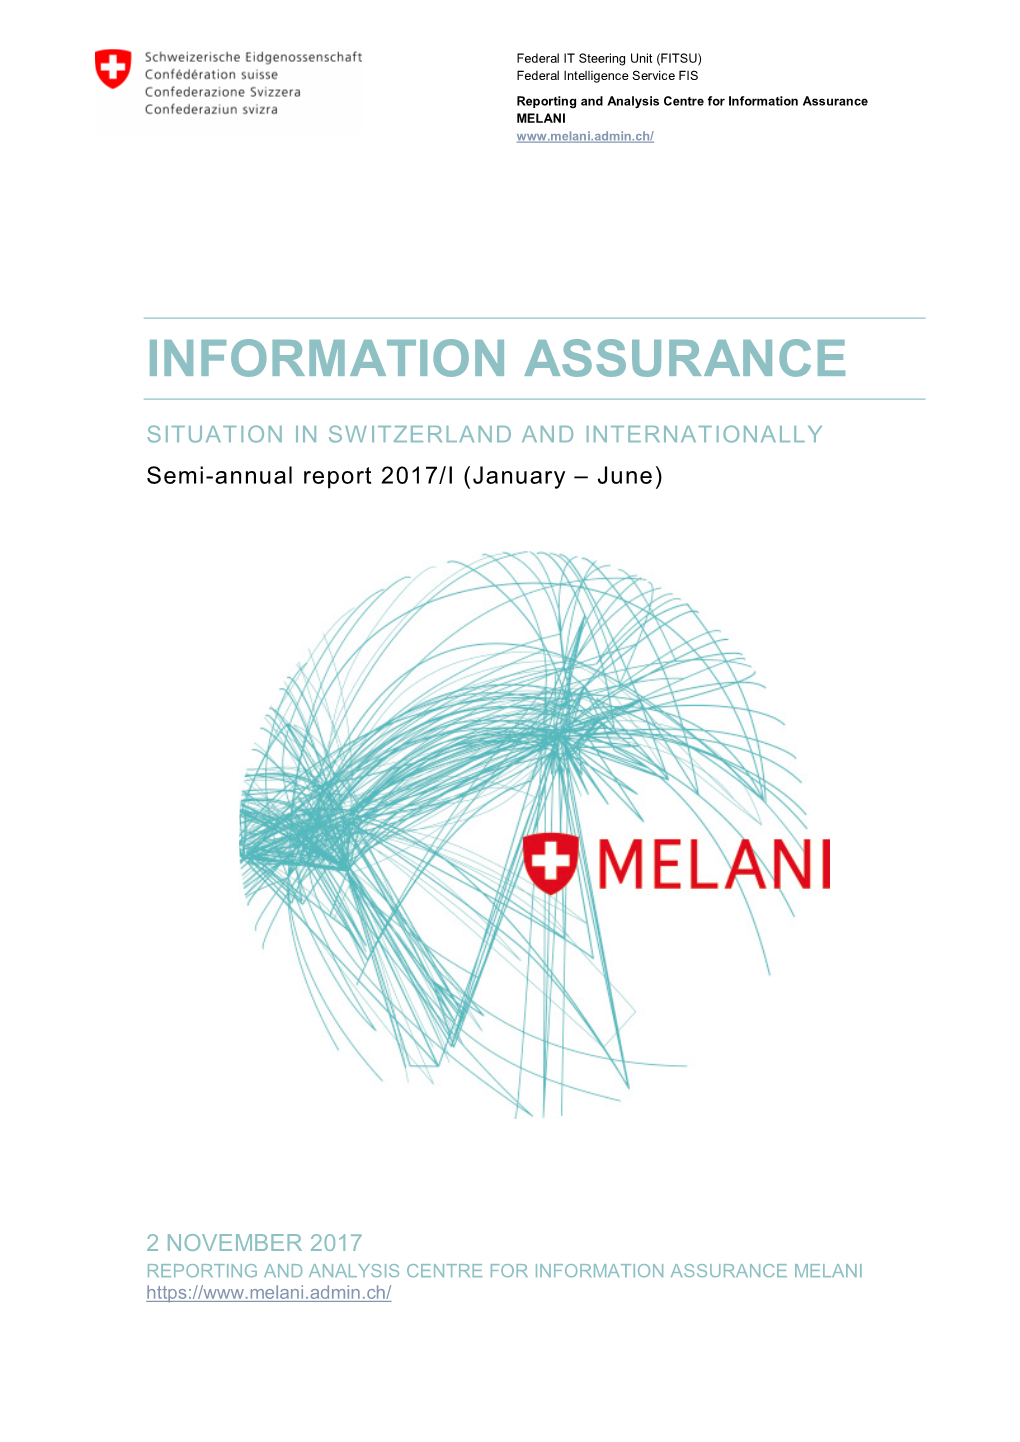 Information Assurance MELANI